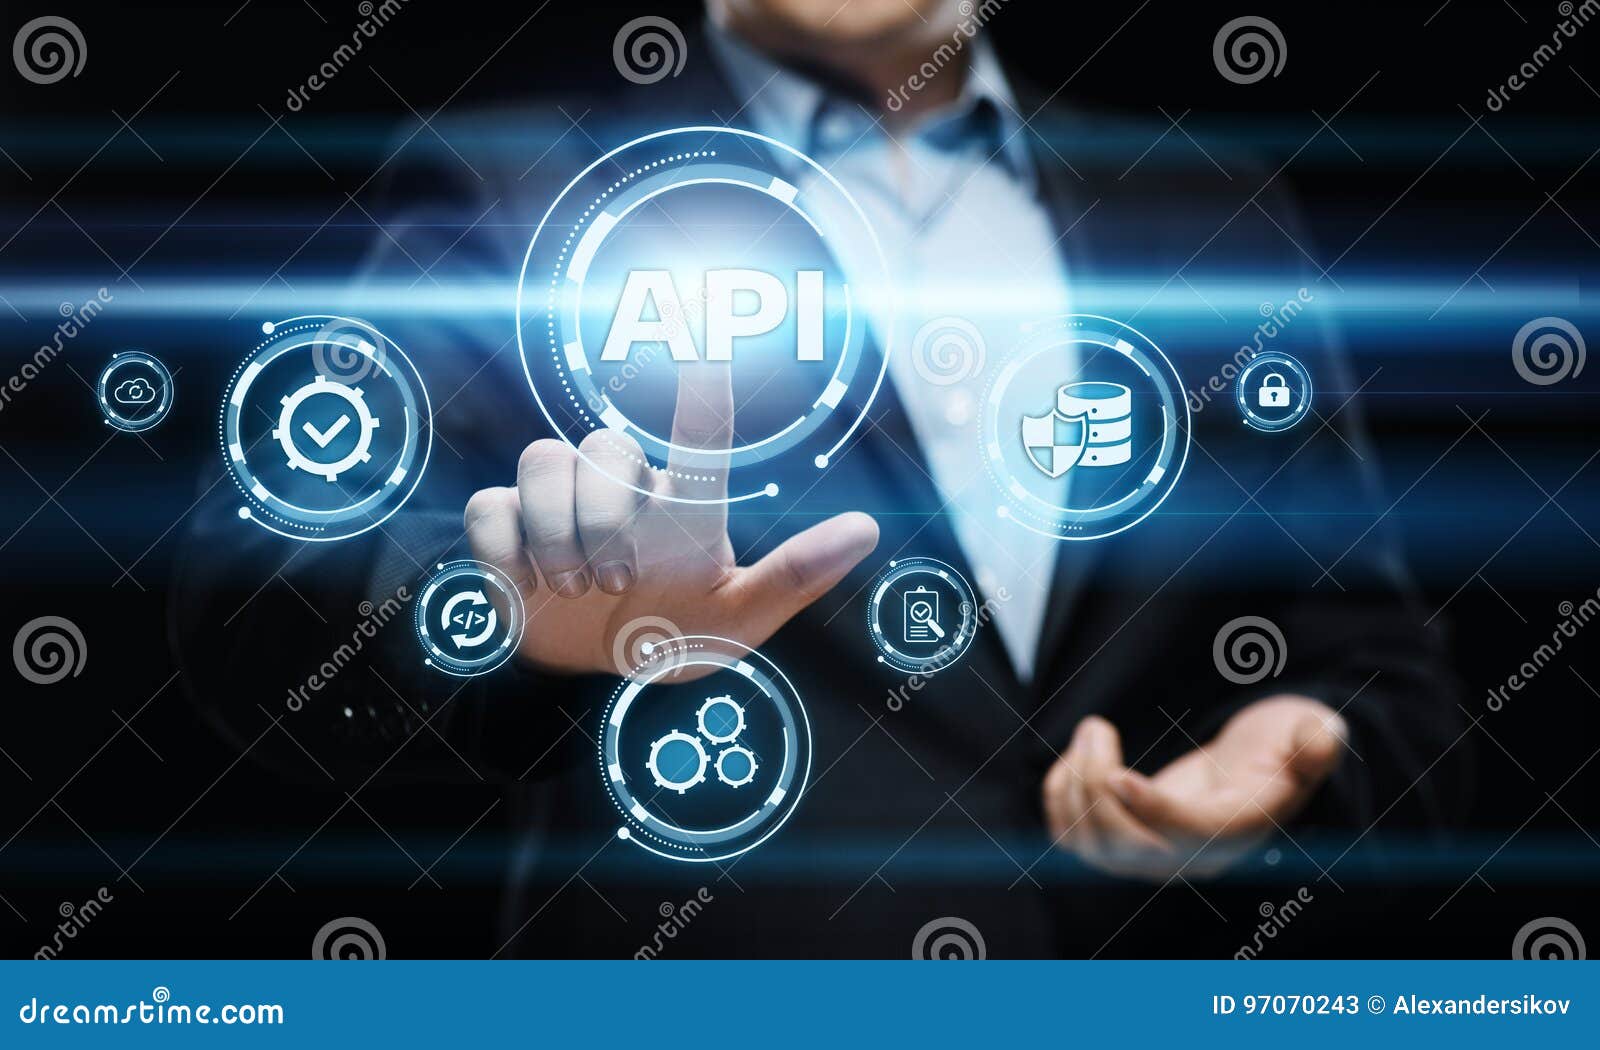 api application programming interface software web development concept